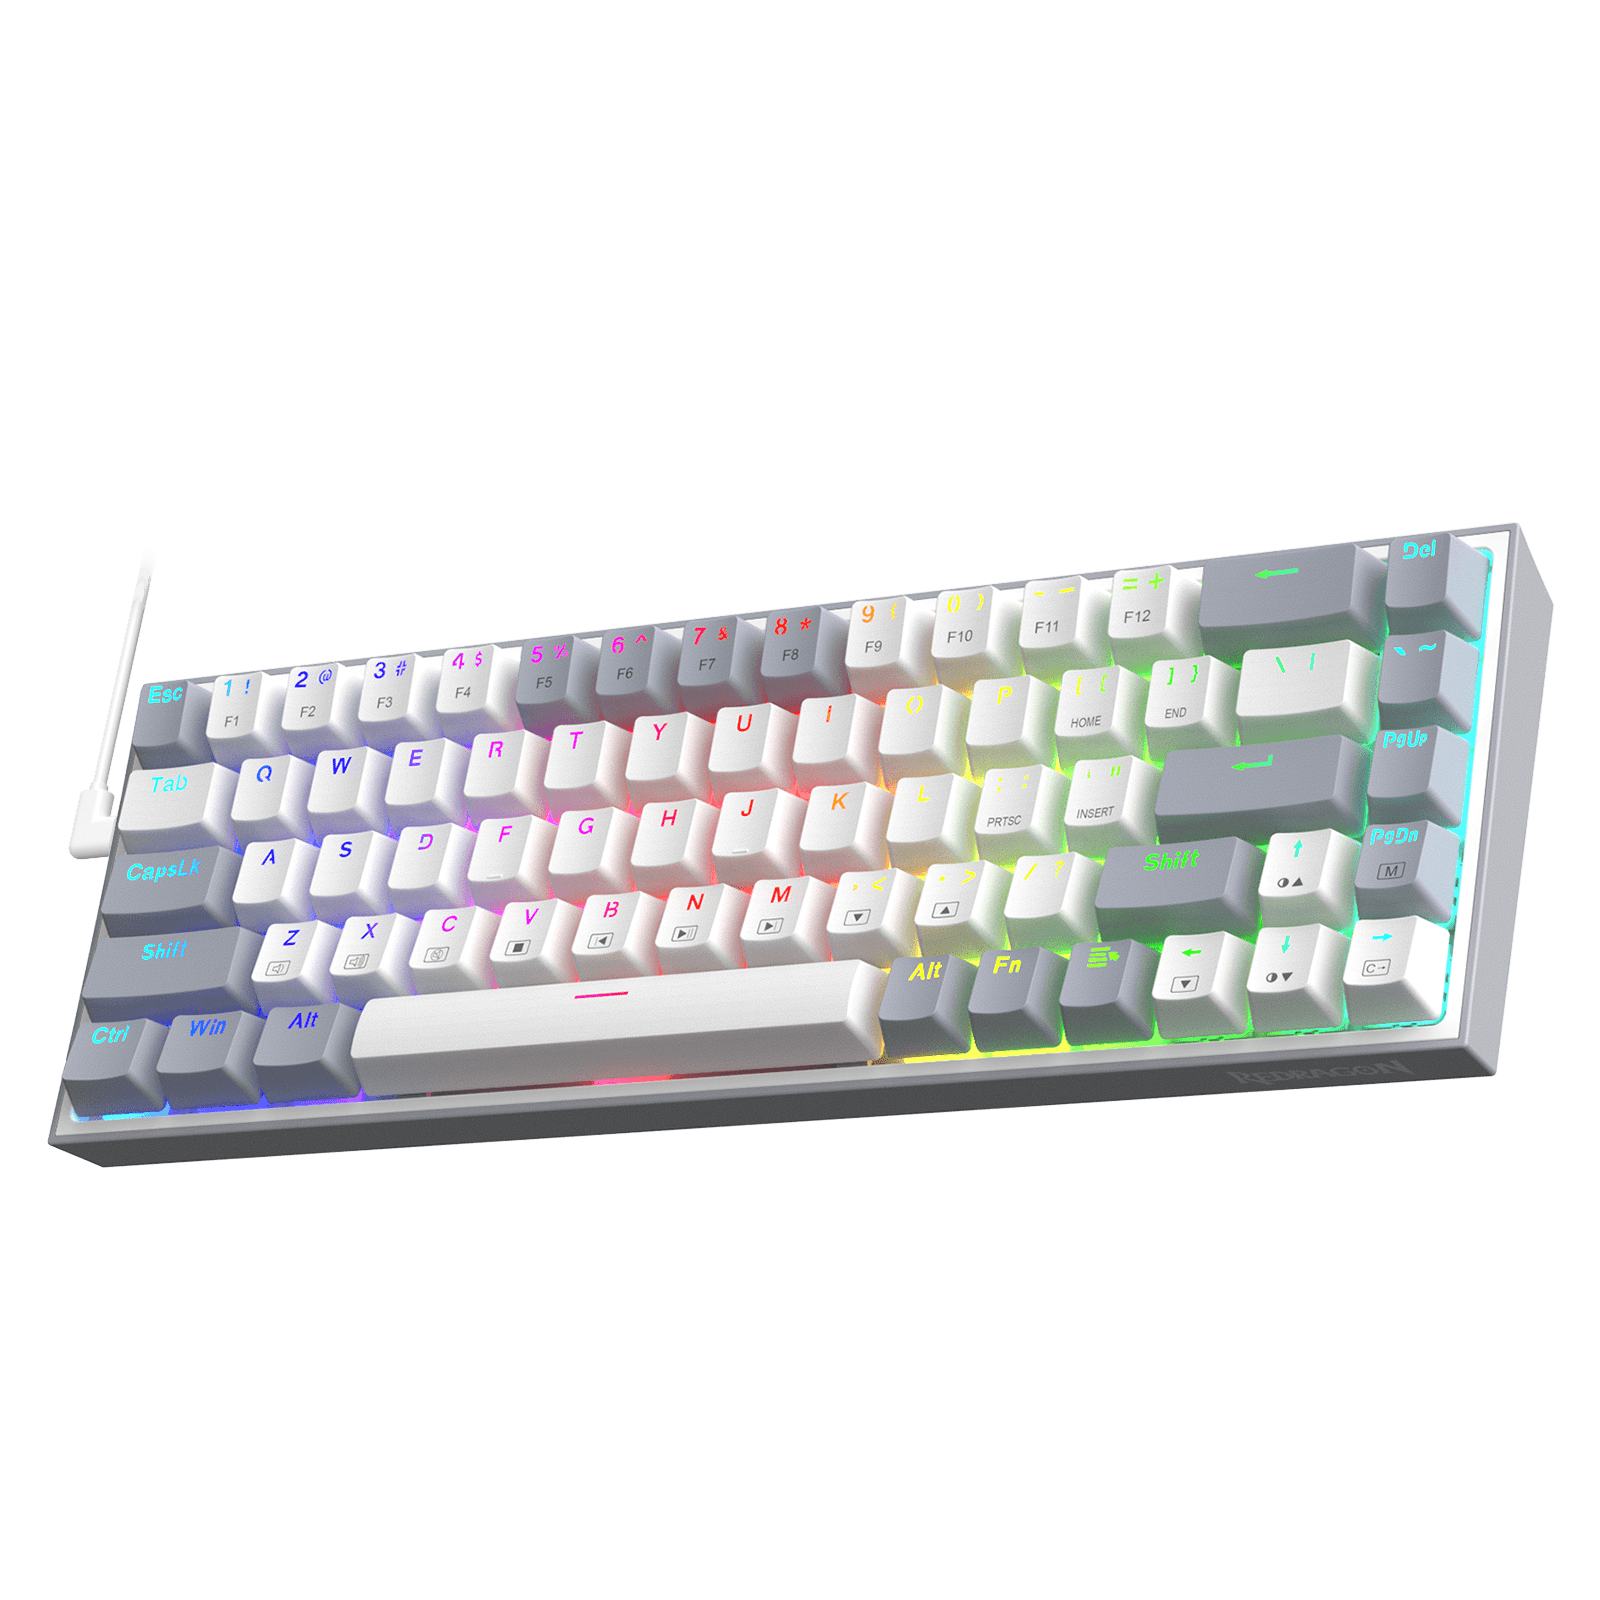 Redragon K631 65% Hot-Swap Mechanical Gaming Keyboard, Grey Color